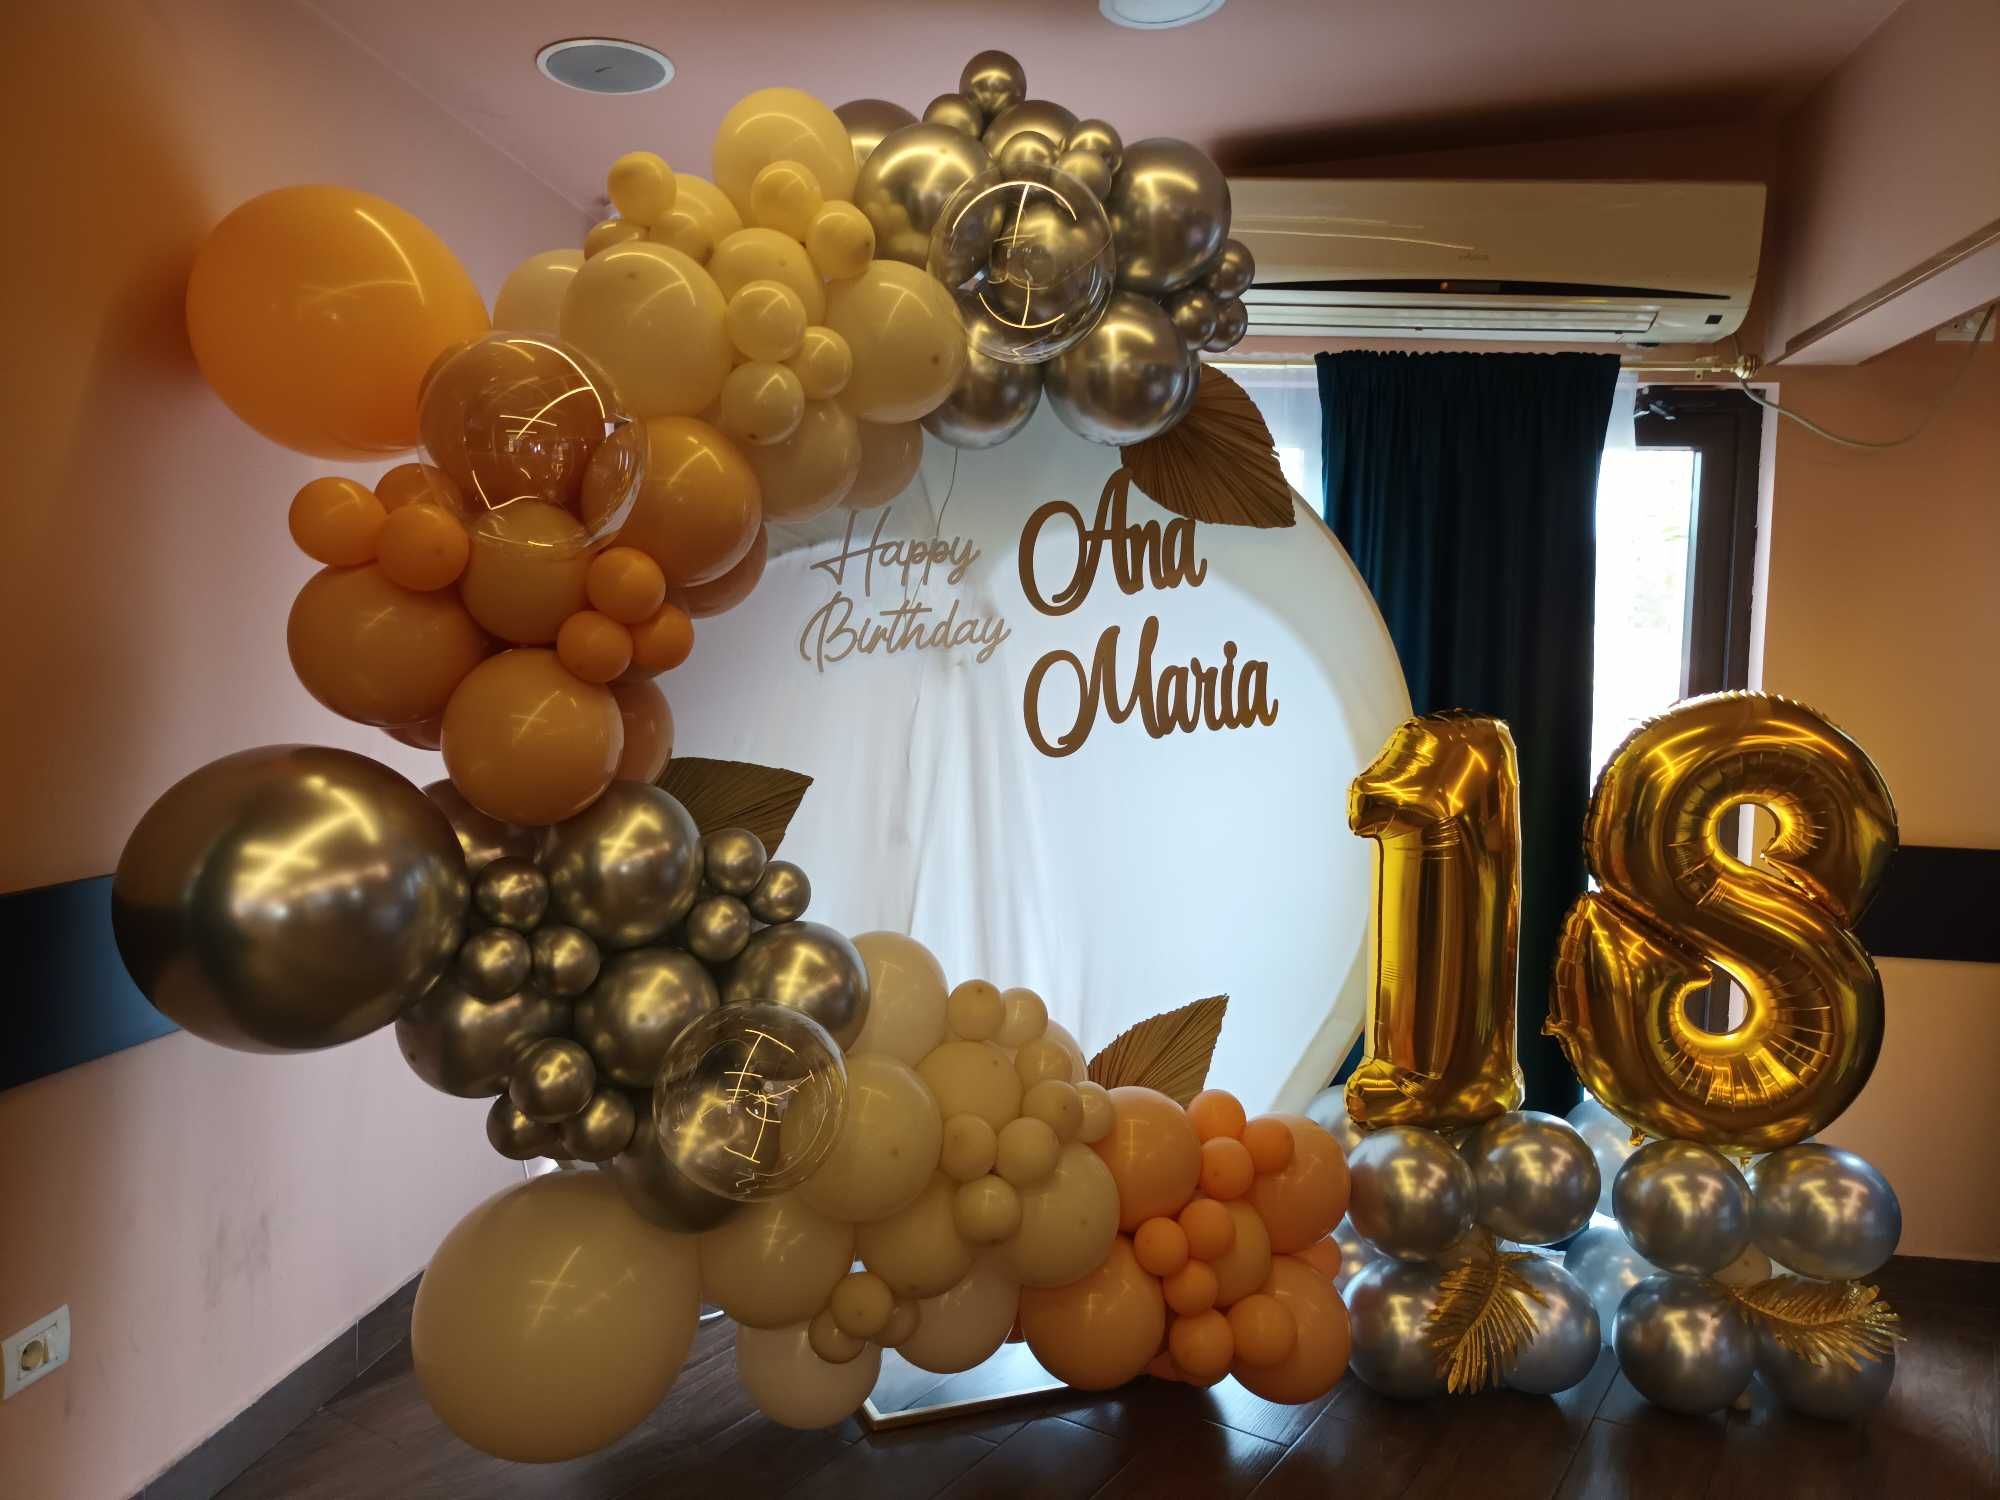 Arcada baloane aniversare majorat party / Decor foto baloane botez